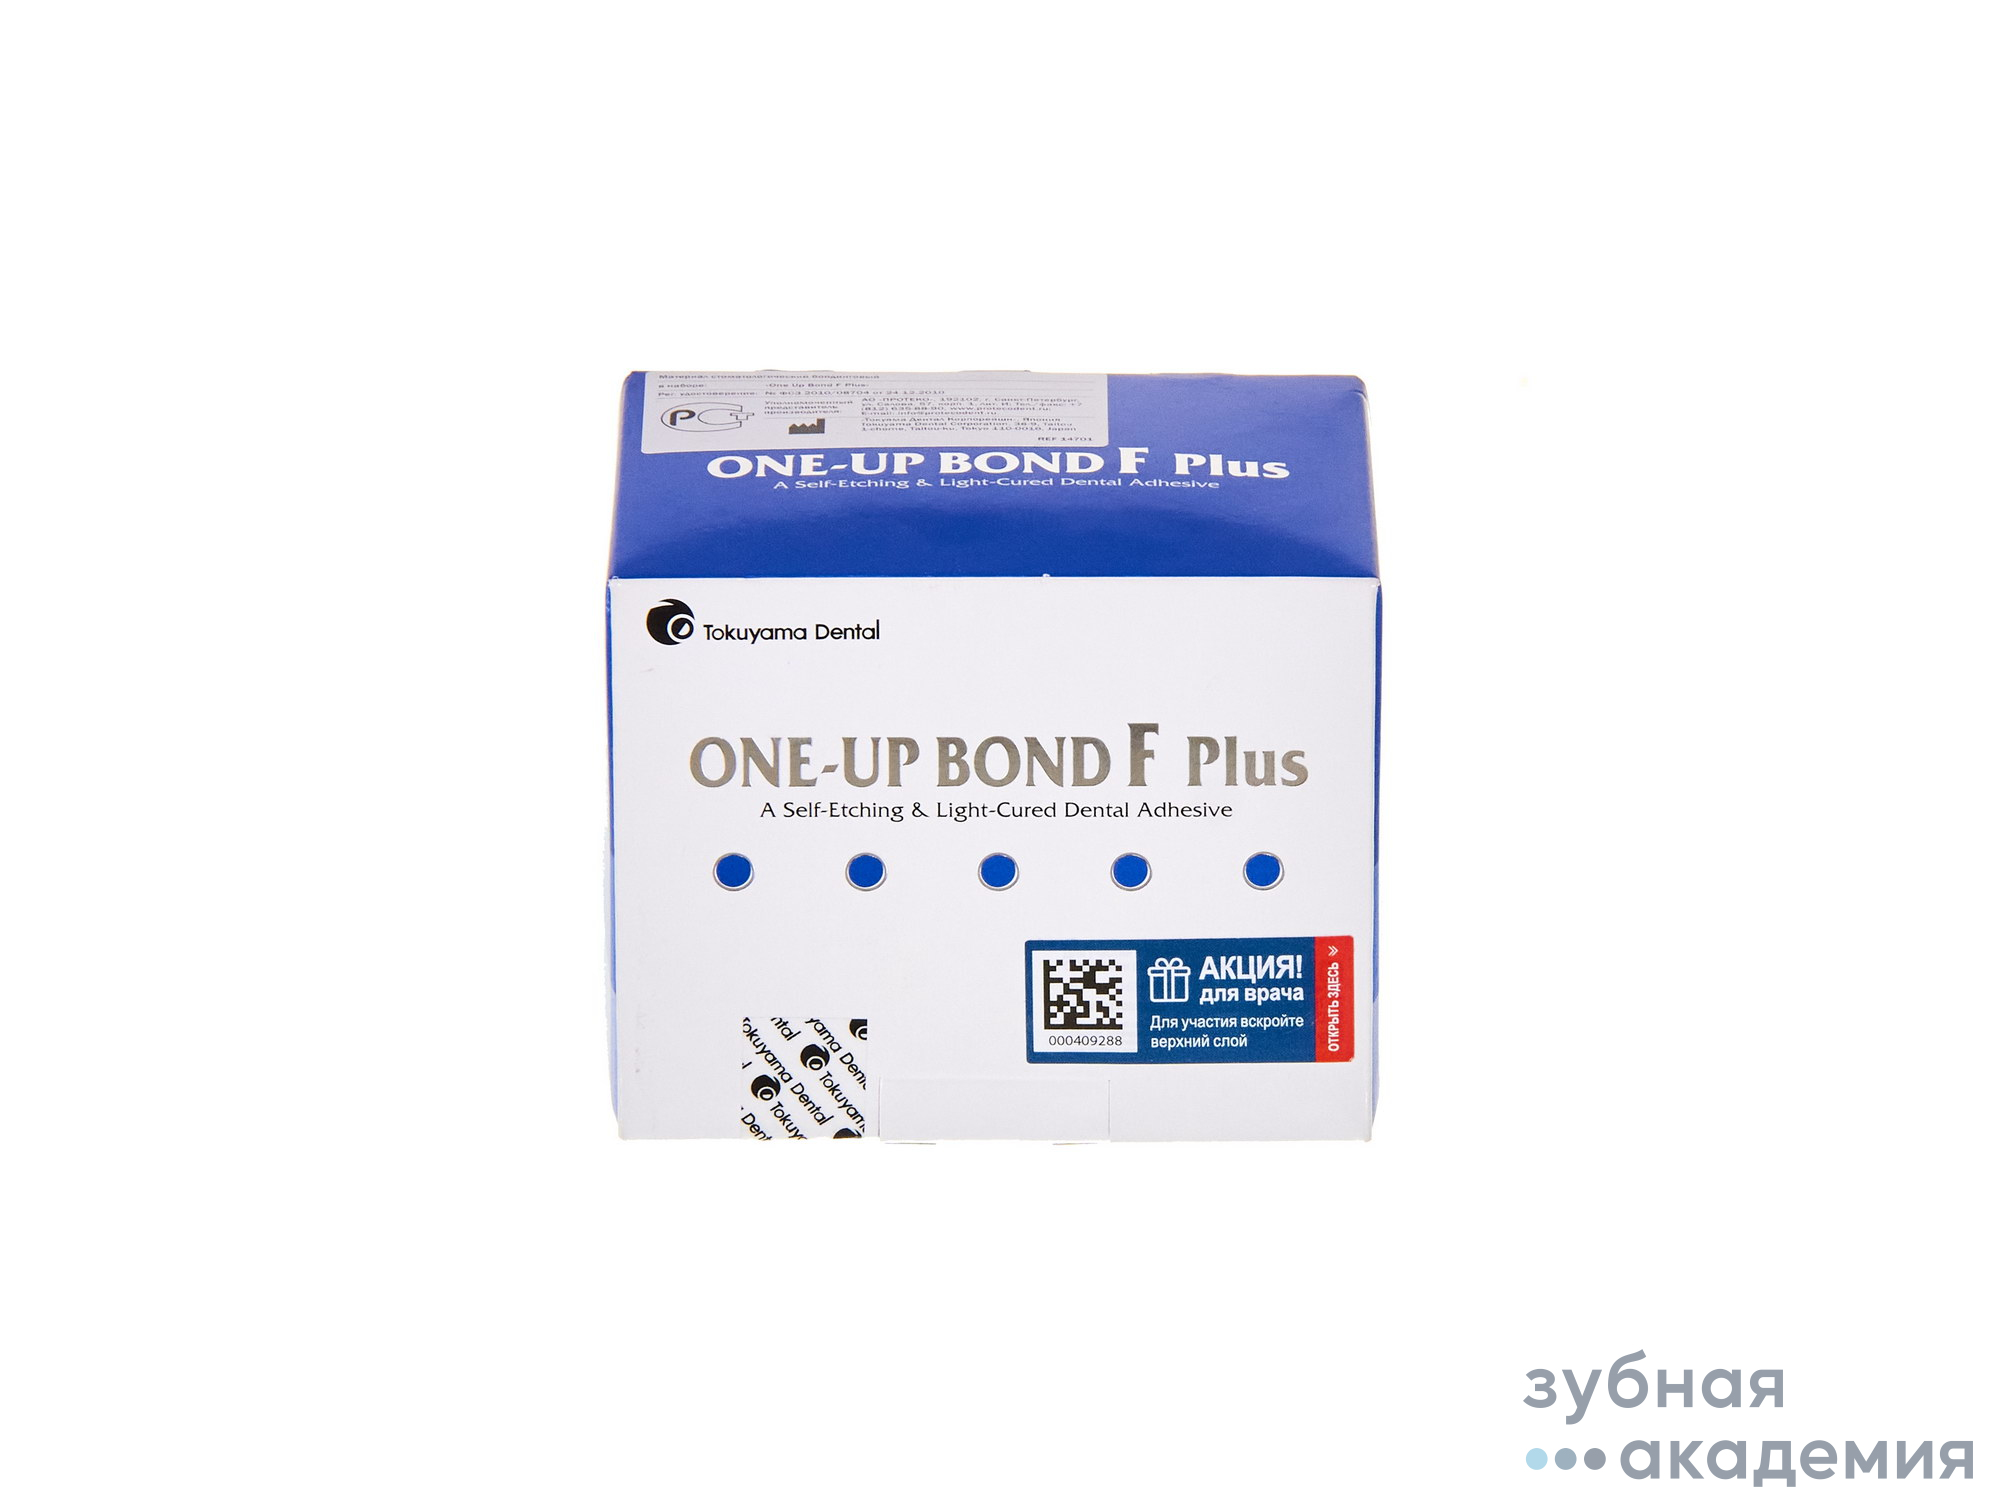 Адгезив ONE-UP BOND F Plus упаковка 5мл+5мл /Tokuyama Dental/ Япония